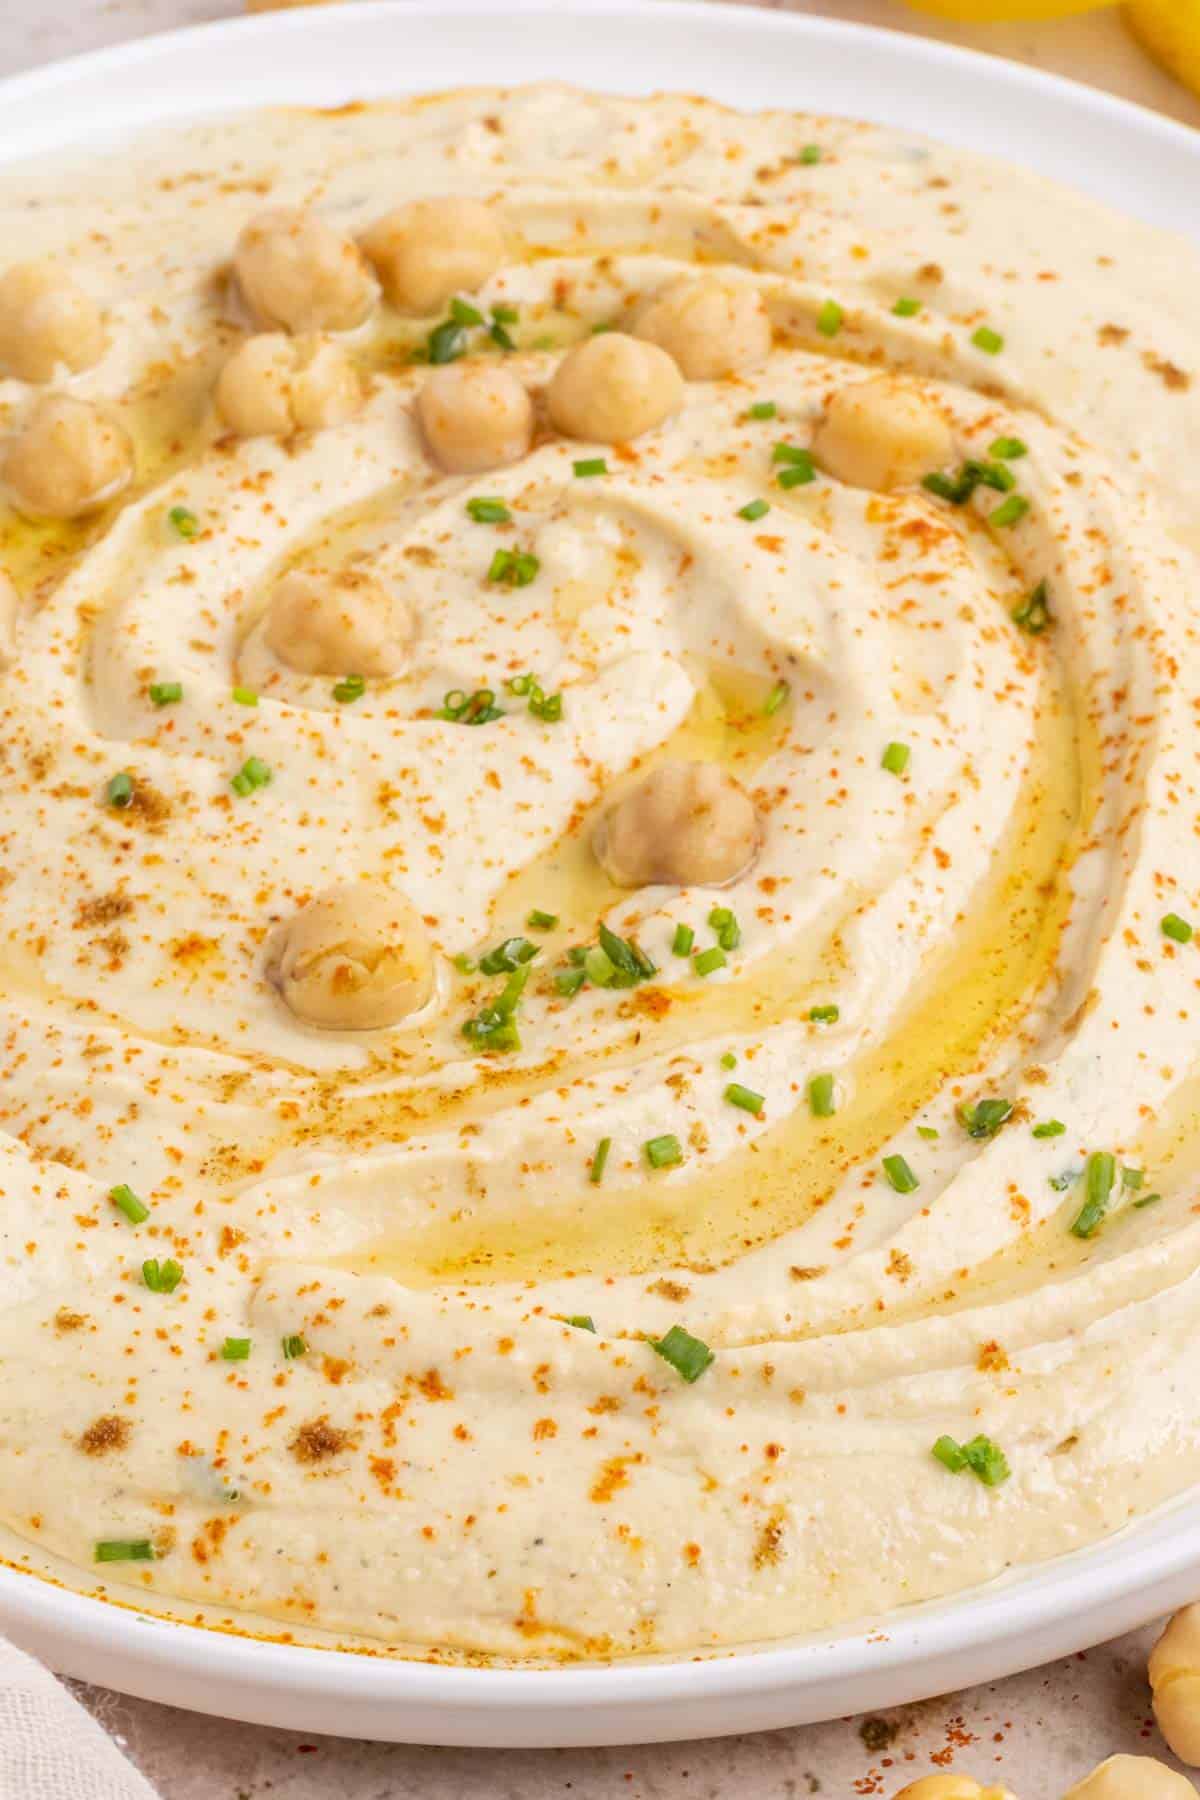 An up close image showing the texture of garlic hummus.